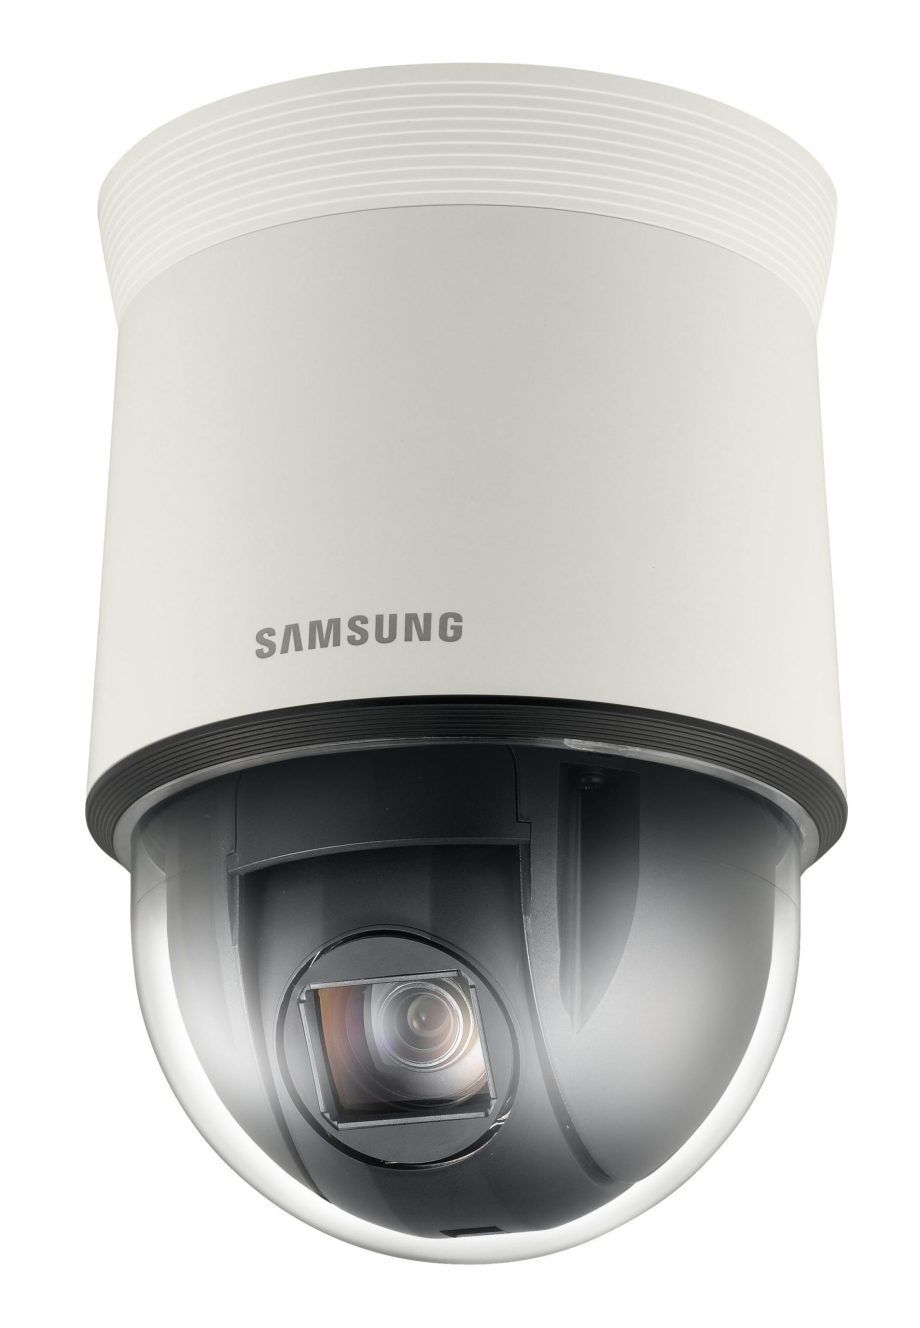 Samsung SNP-6321 2 Megapixel Full HD 32x Network PTZ Camera